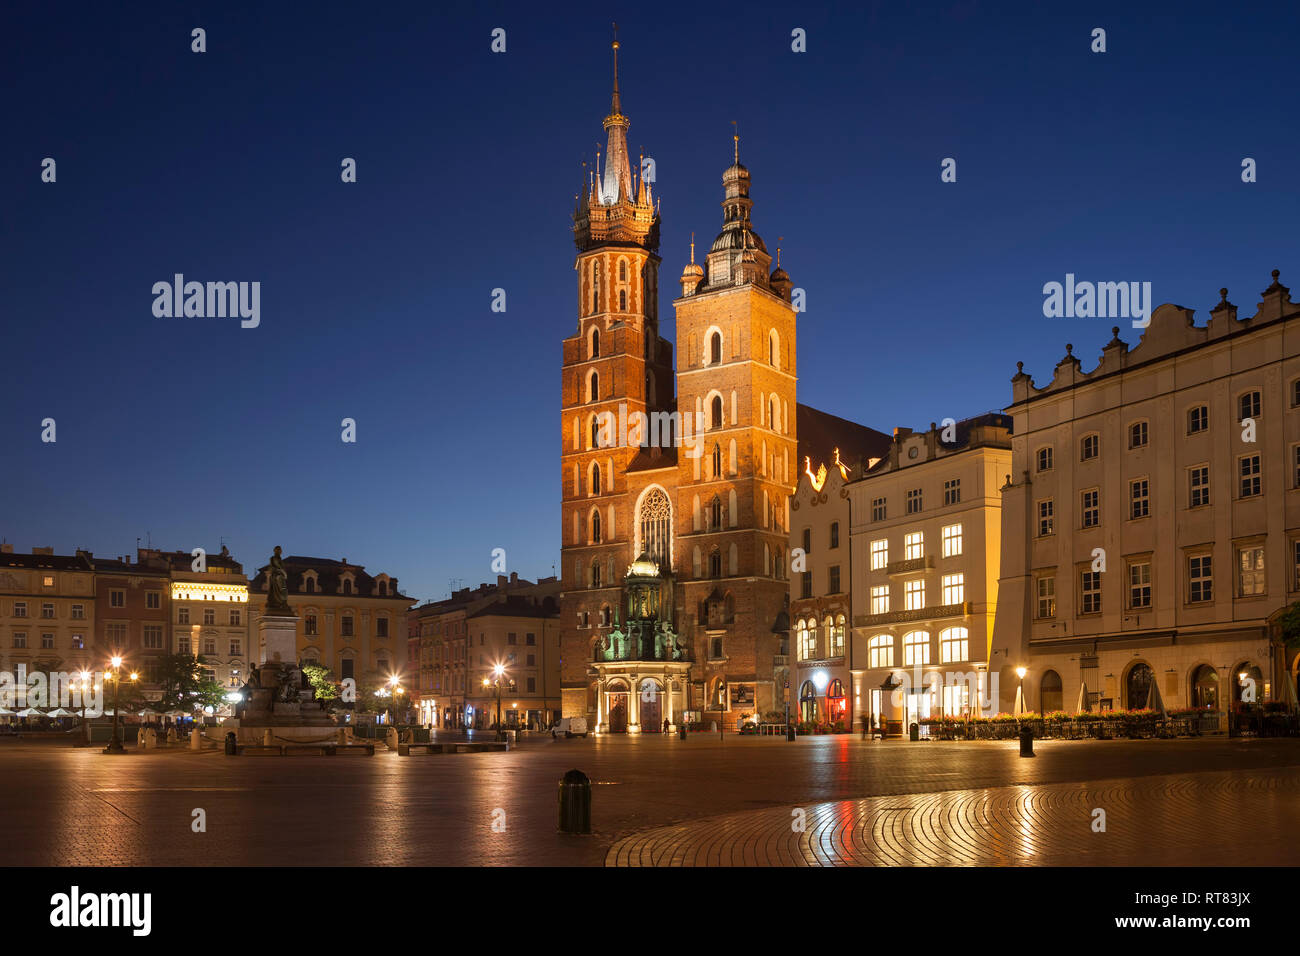 Poland, Krakow, Old Town, city skyline with St. Mary's Basilica at night Stock Photo